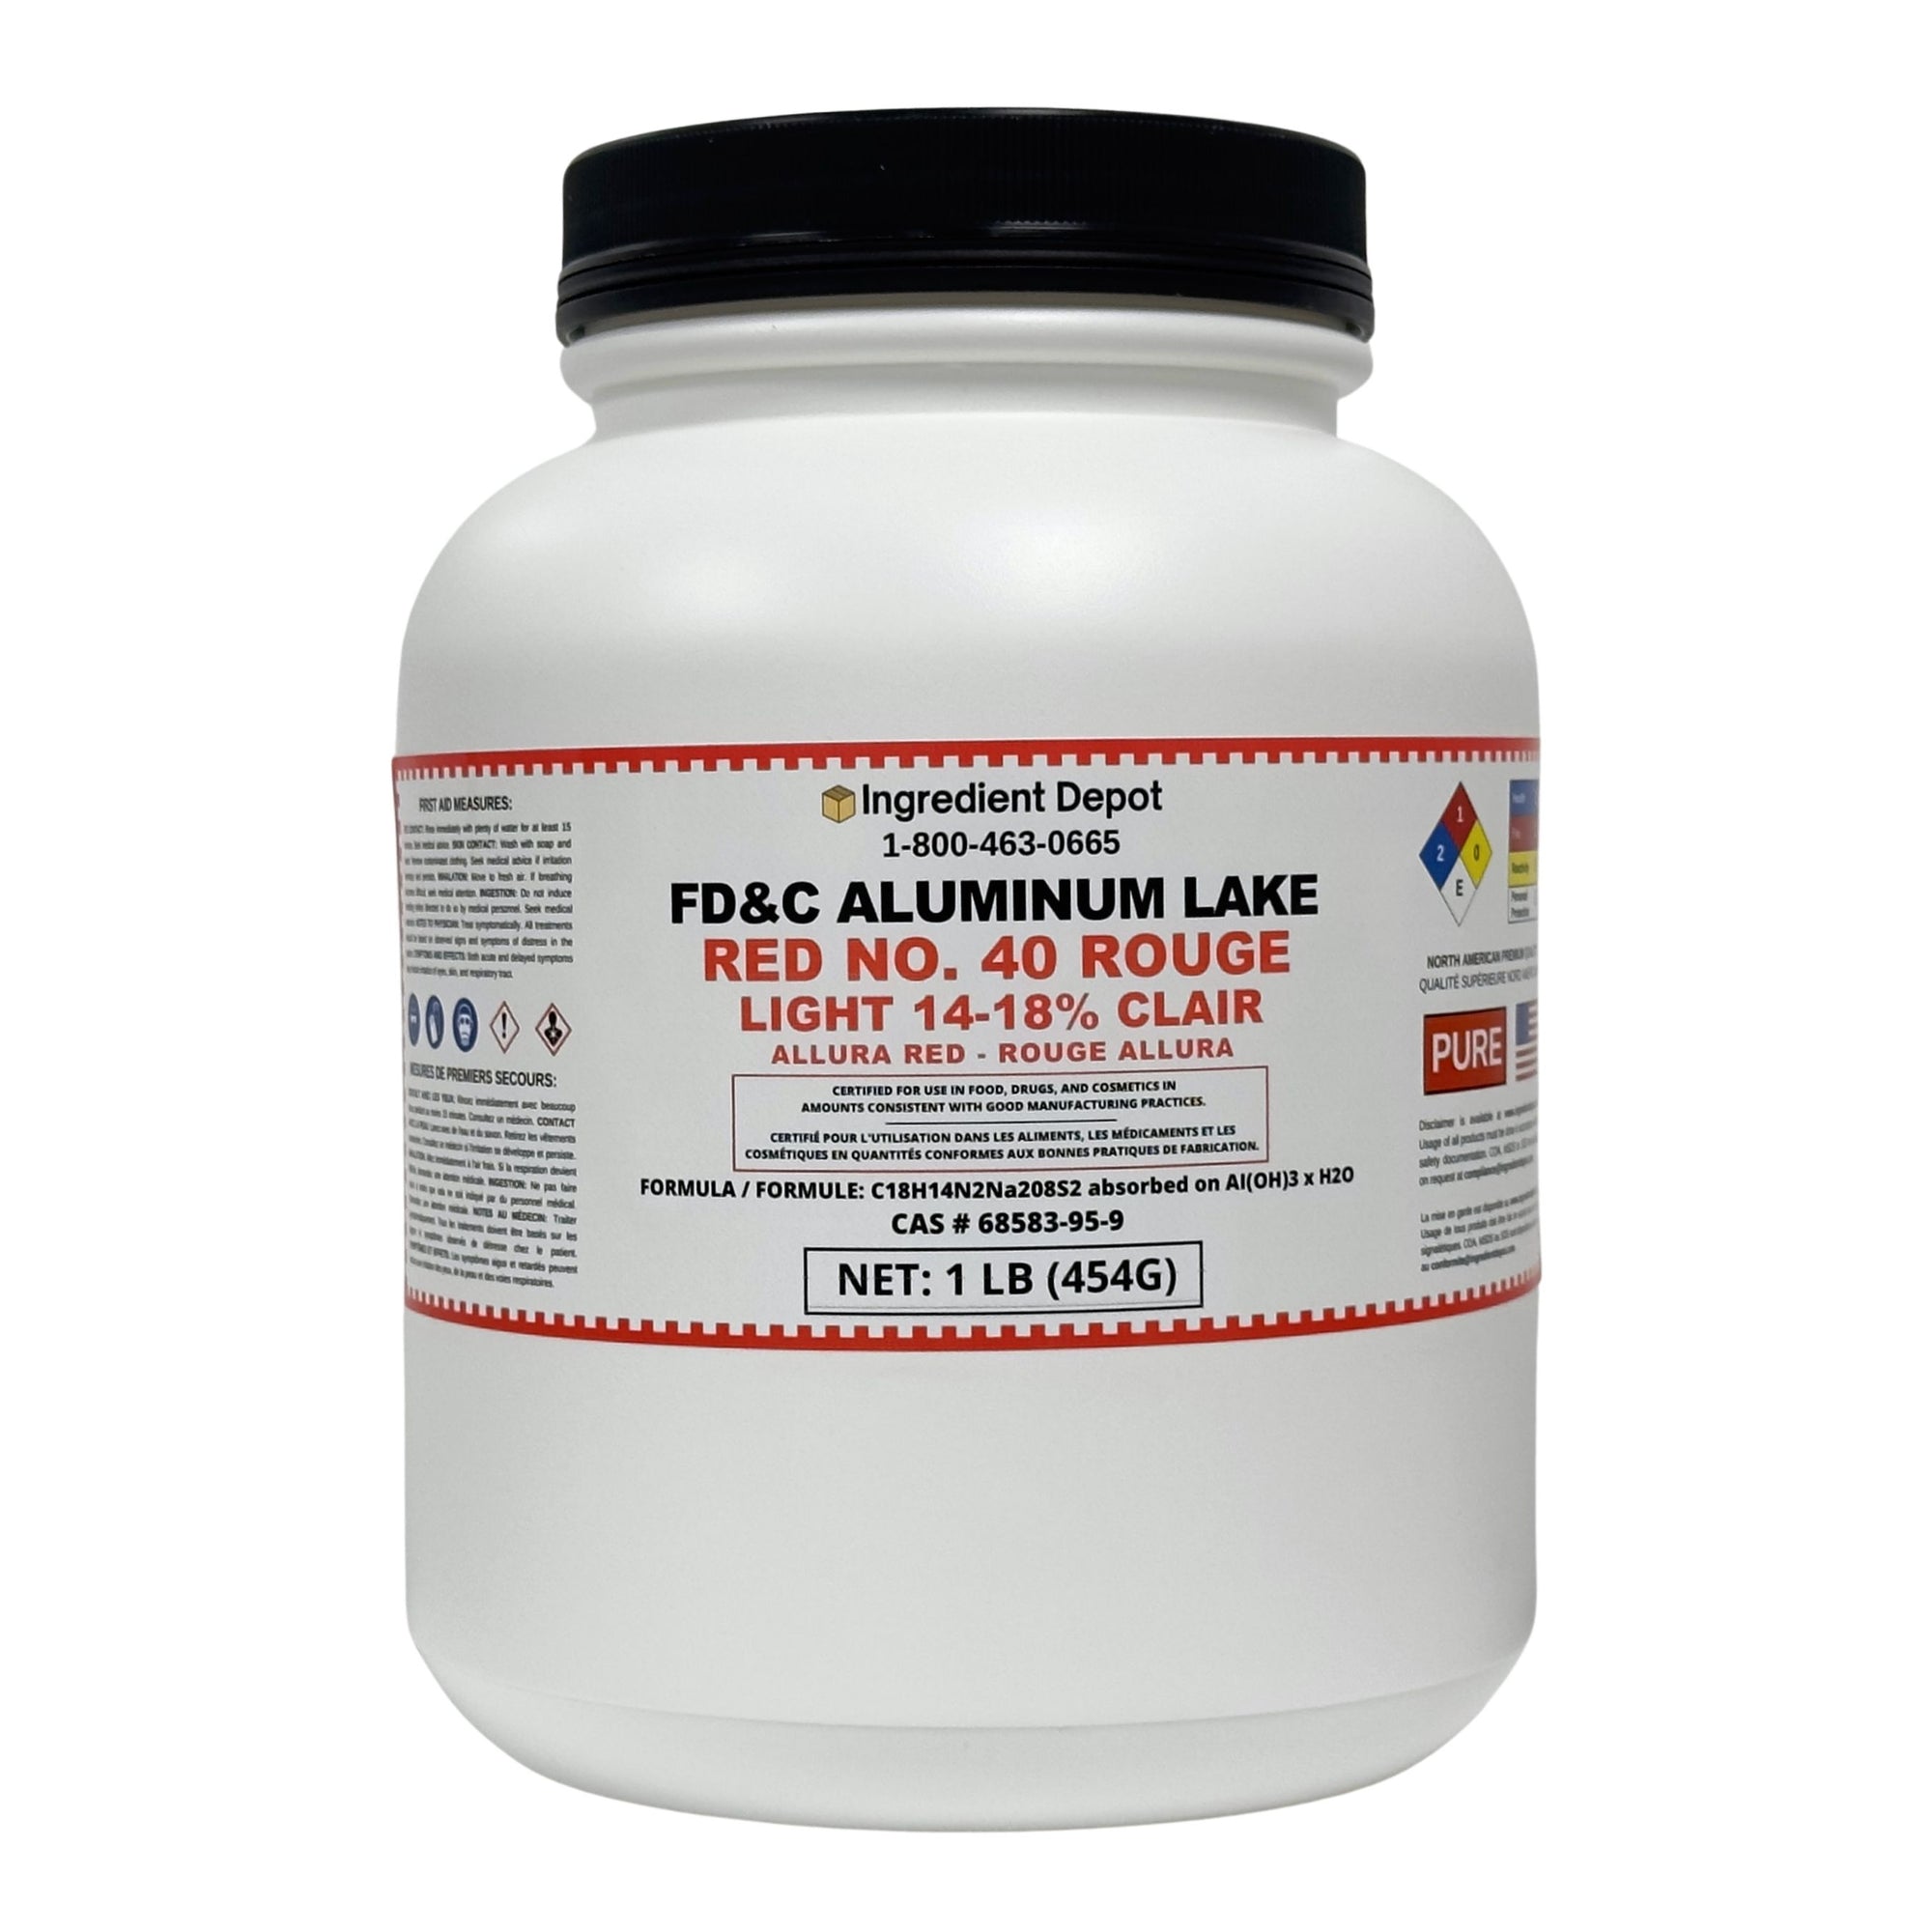 Red No. 40 FD&C Aluminum Lake Light (14-18%) Allura Red 1 lb (454g)